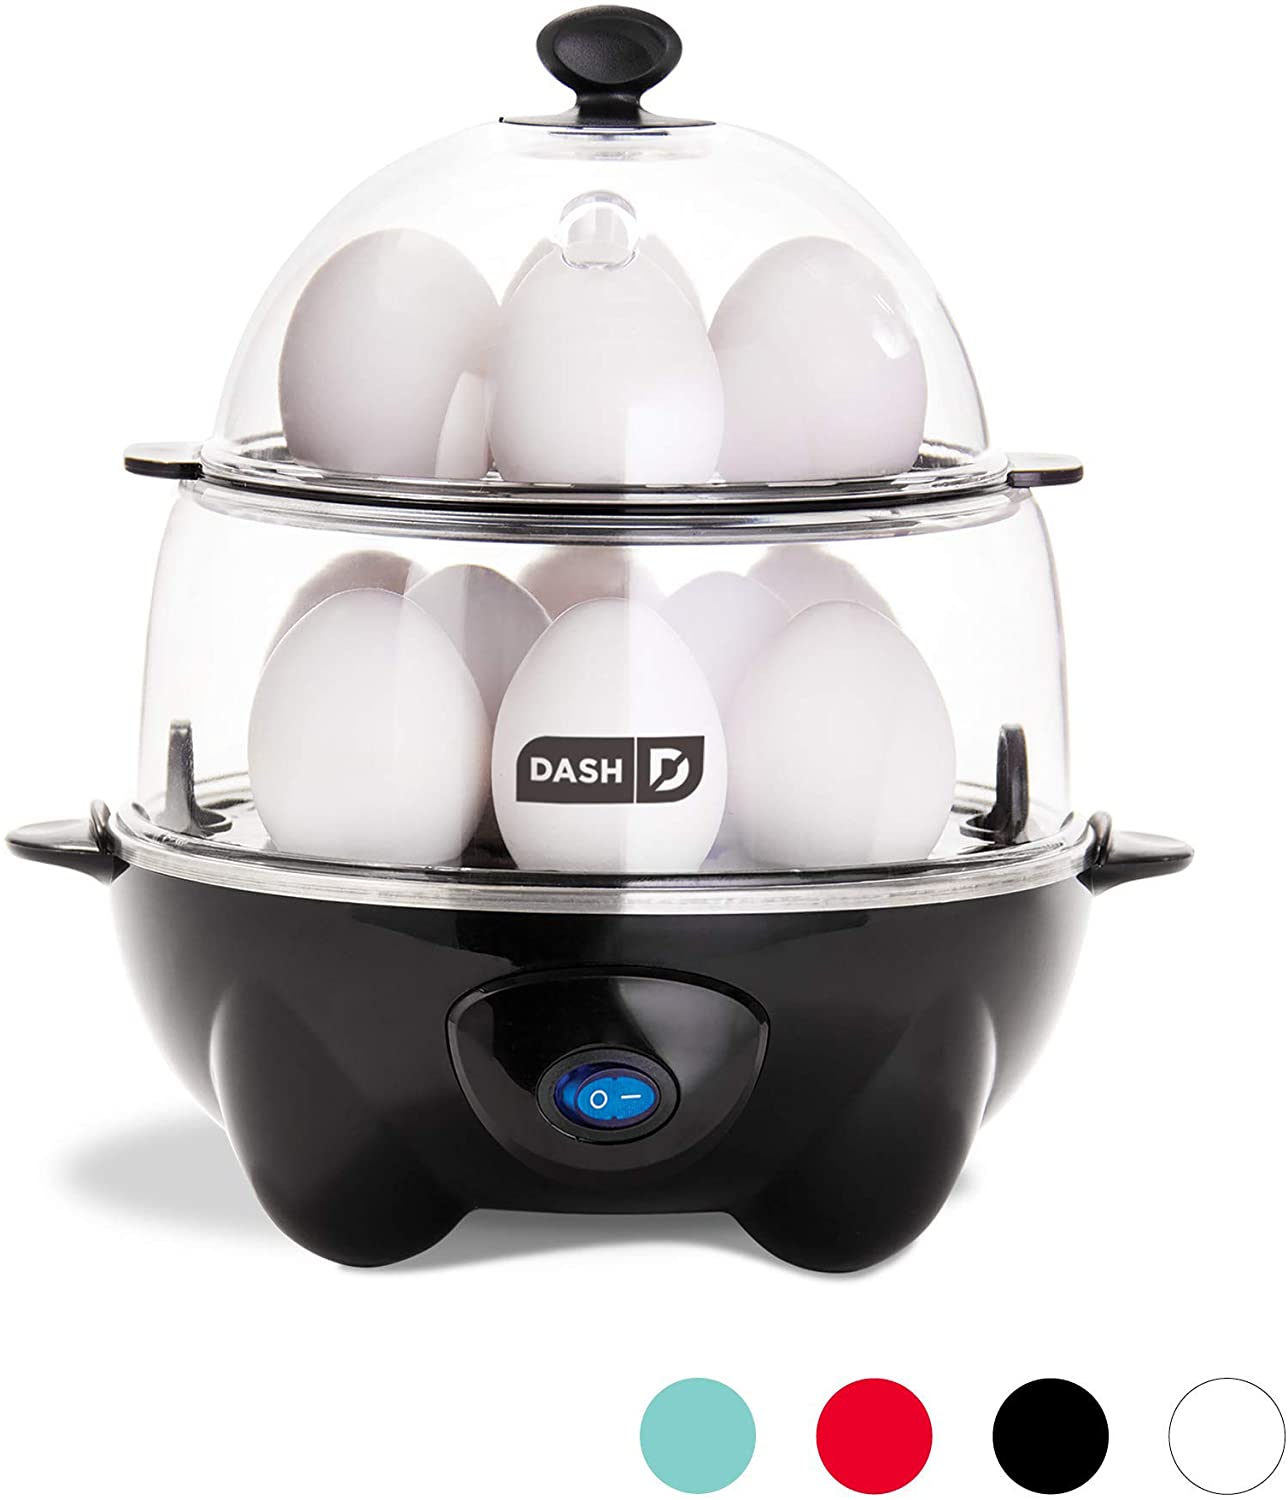  DASH Deluxe Rapid Egg Cooker Electric, 12 Capacity